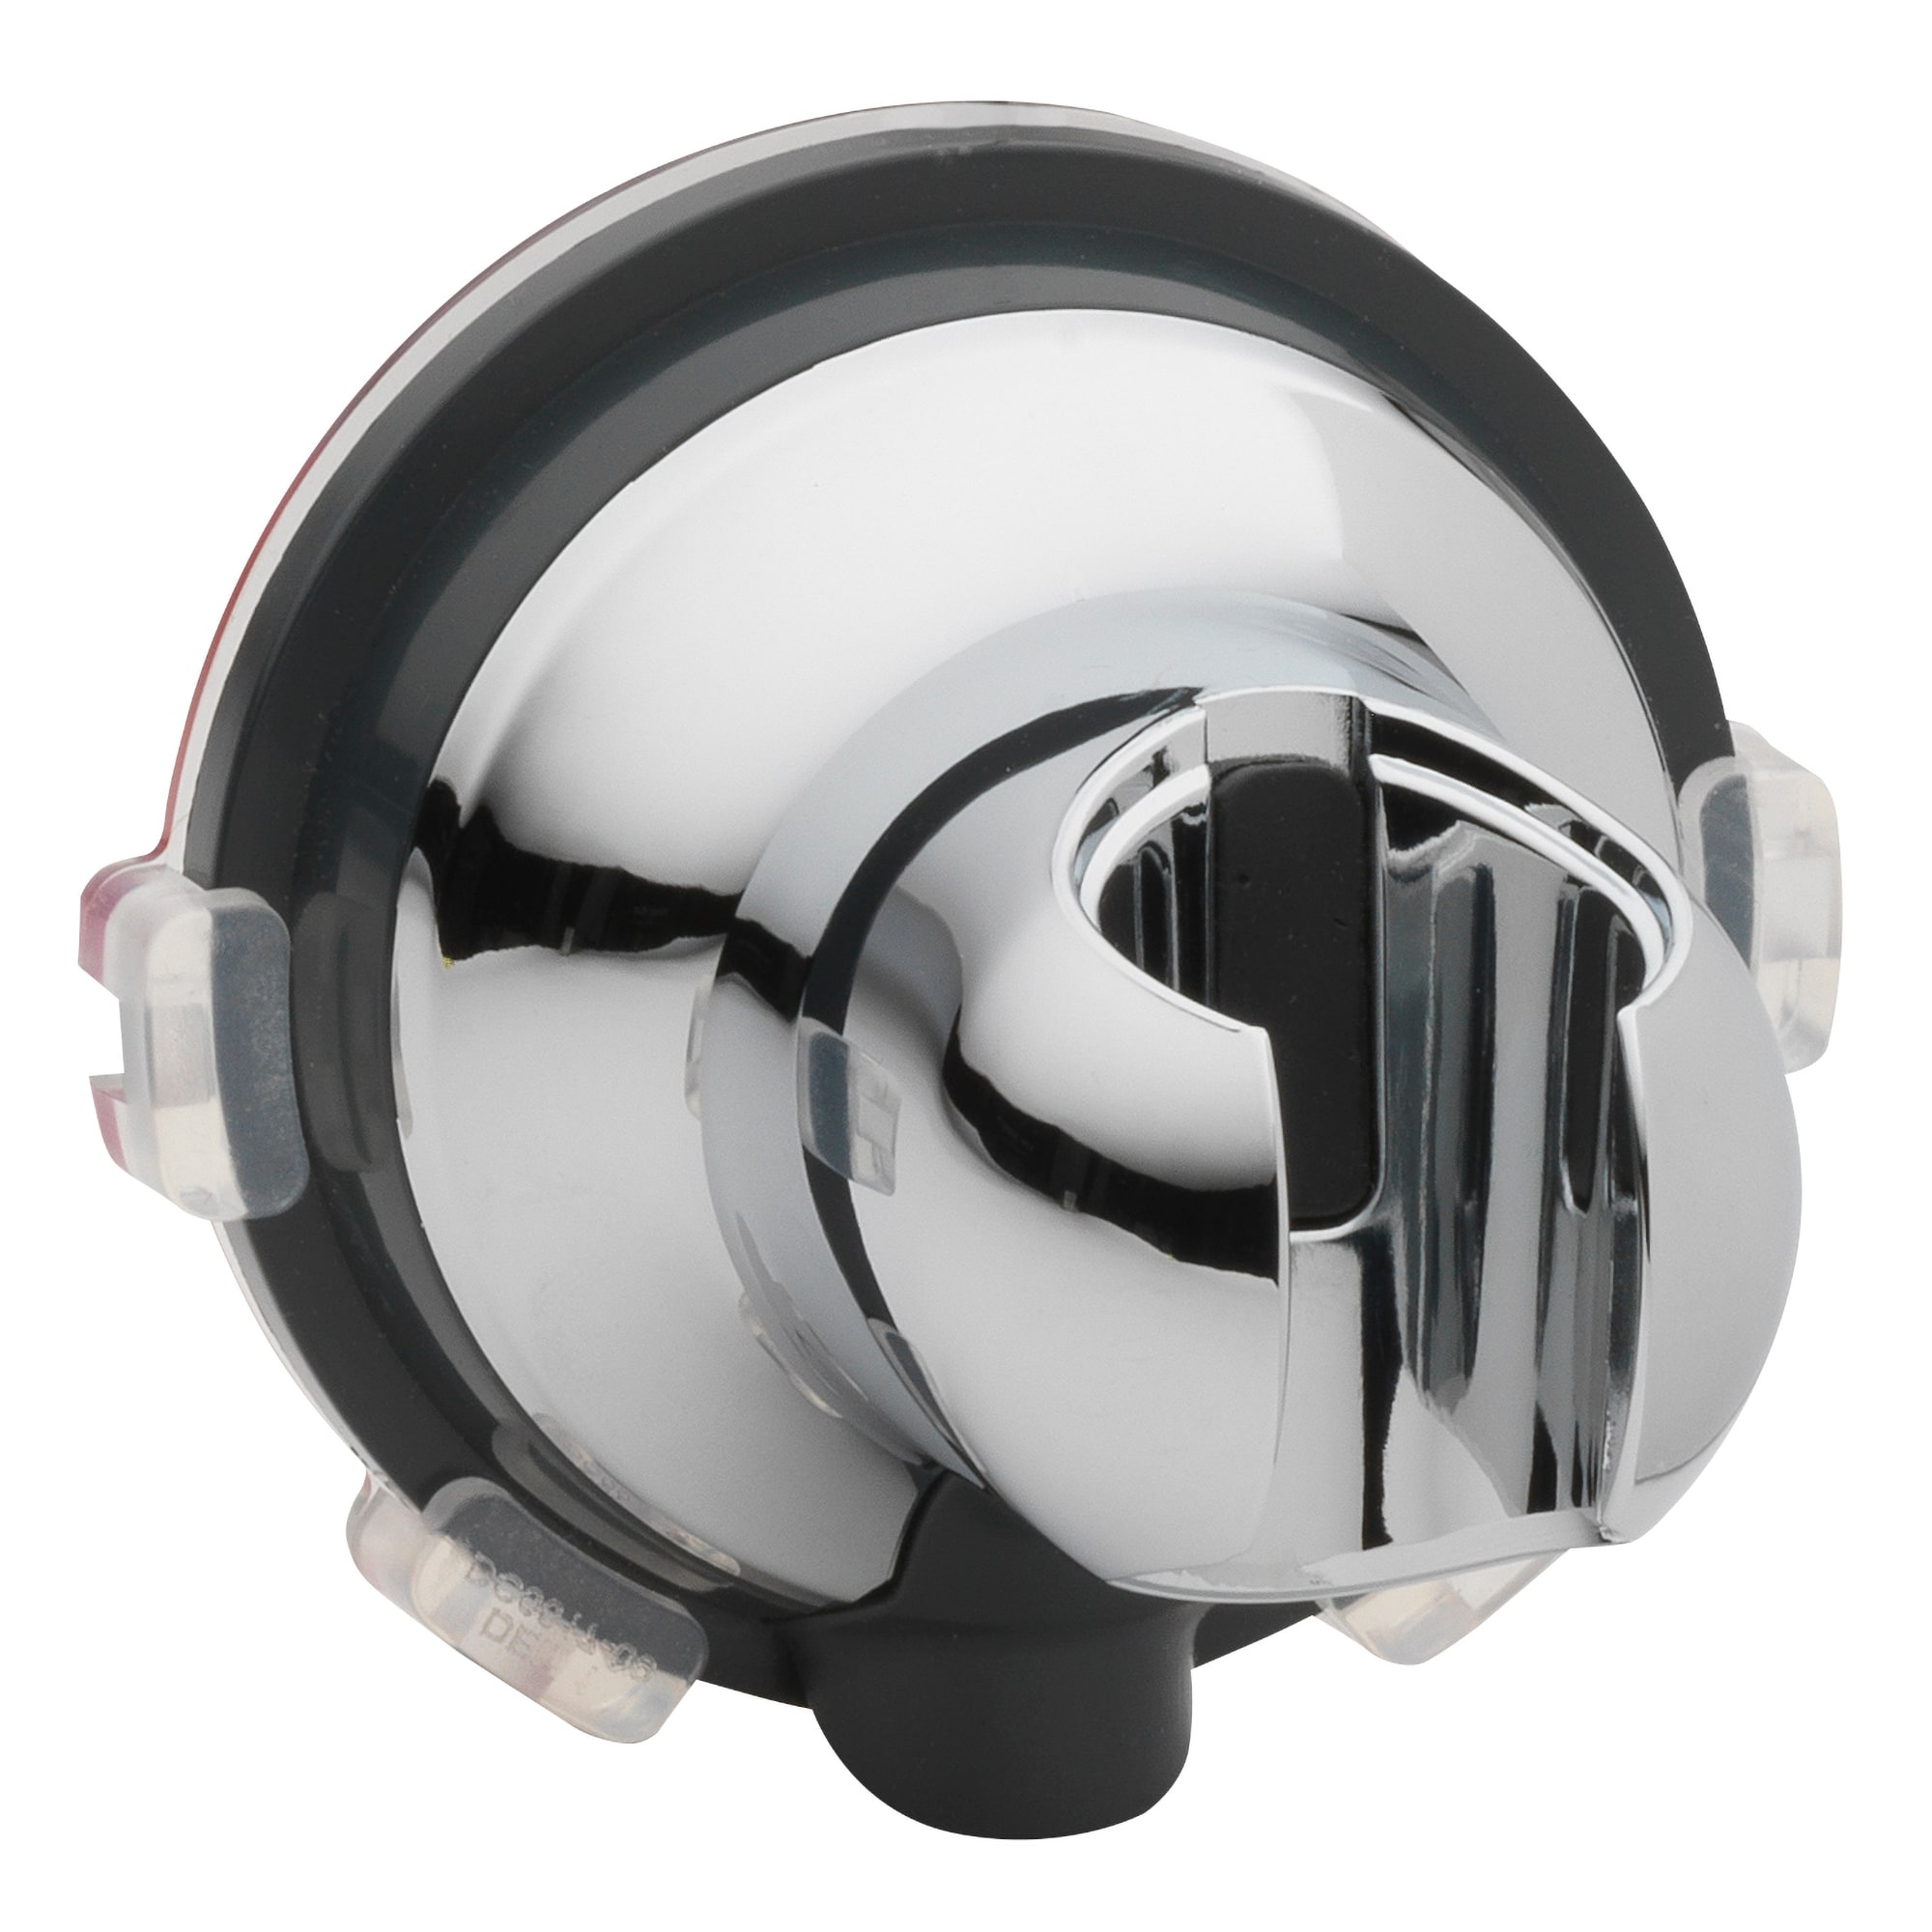 Handheld Shower Head Holder Suction Cup Adjustable Wall Mounted Bathroom  Bracket